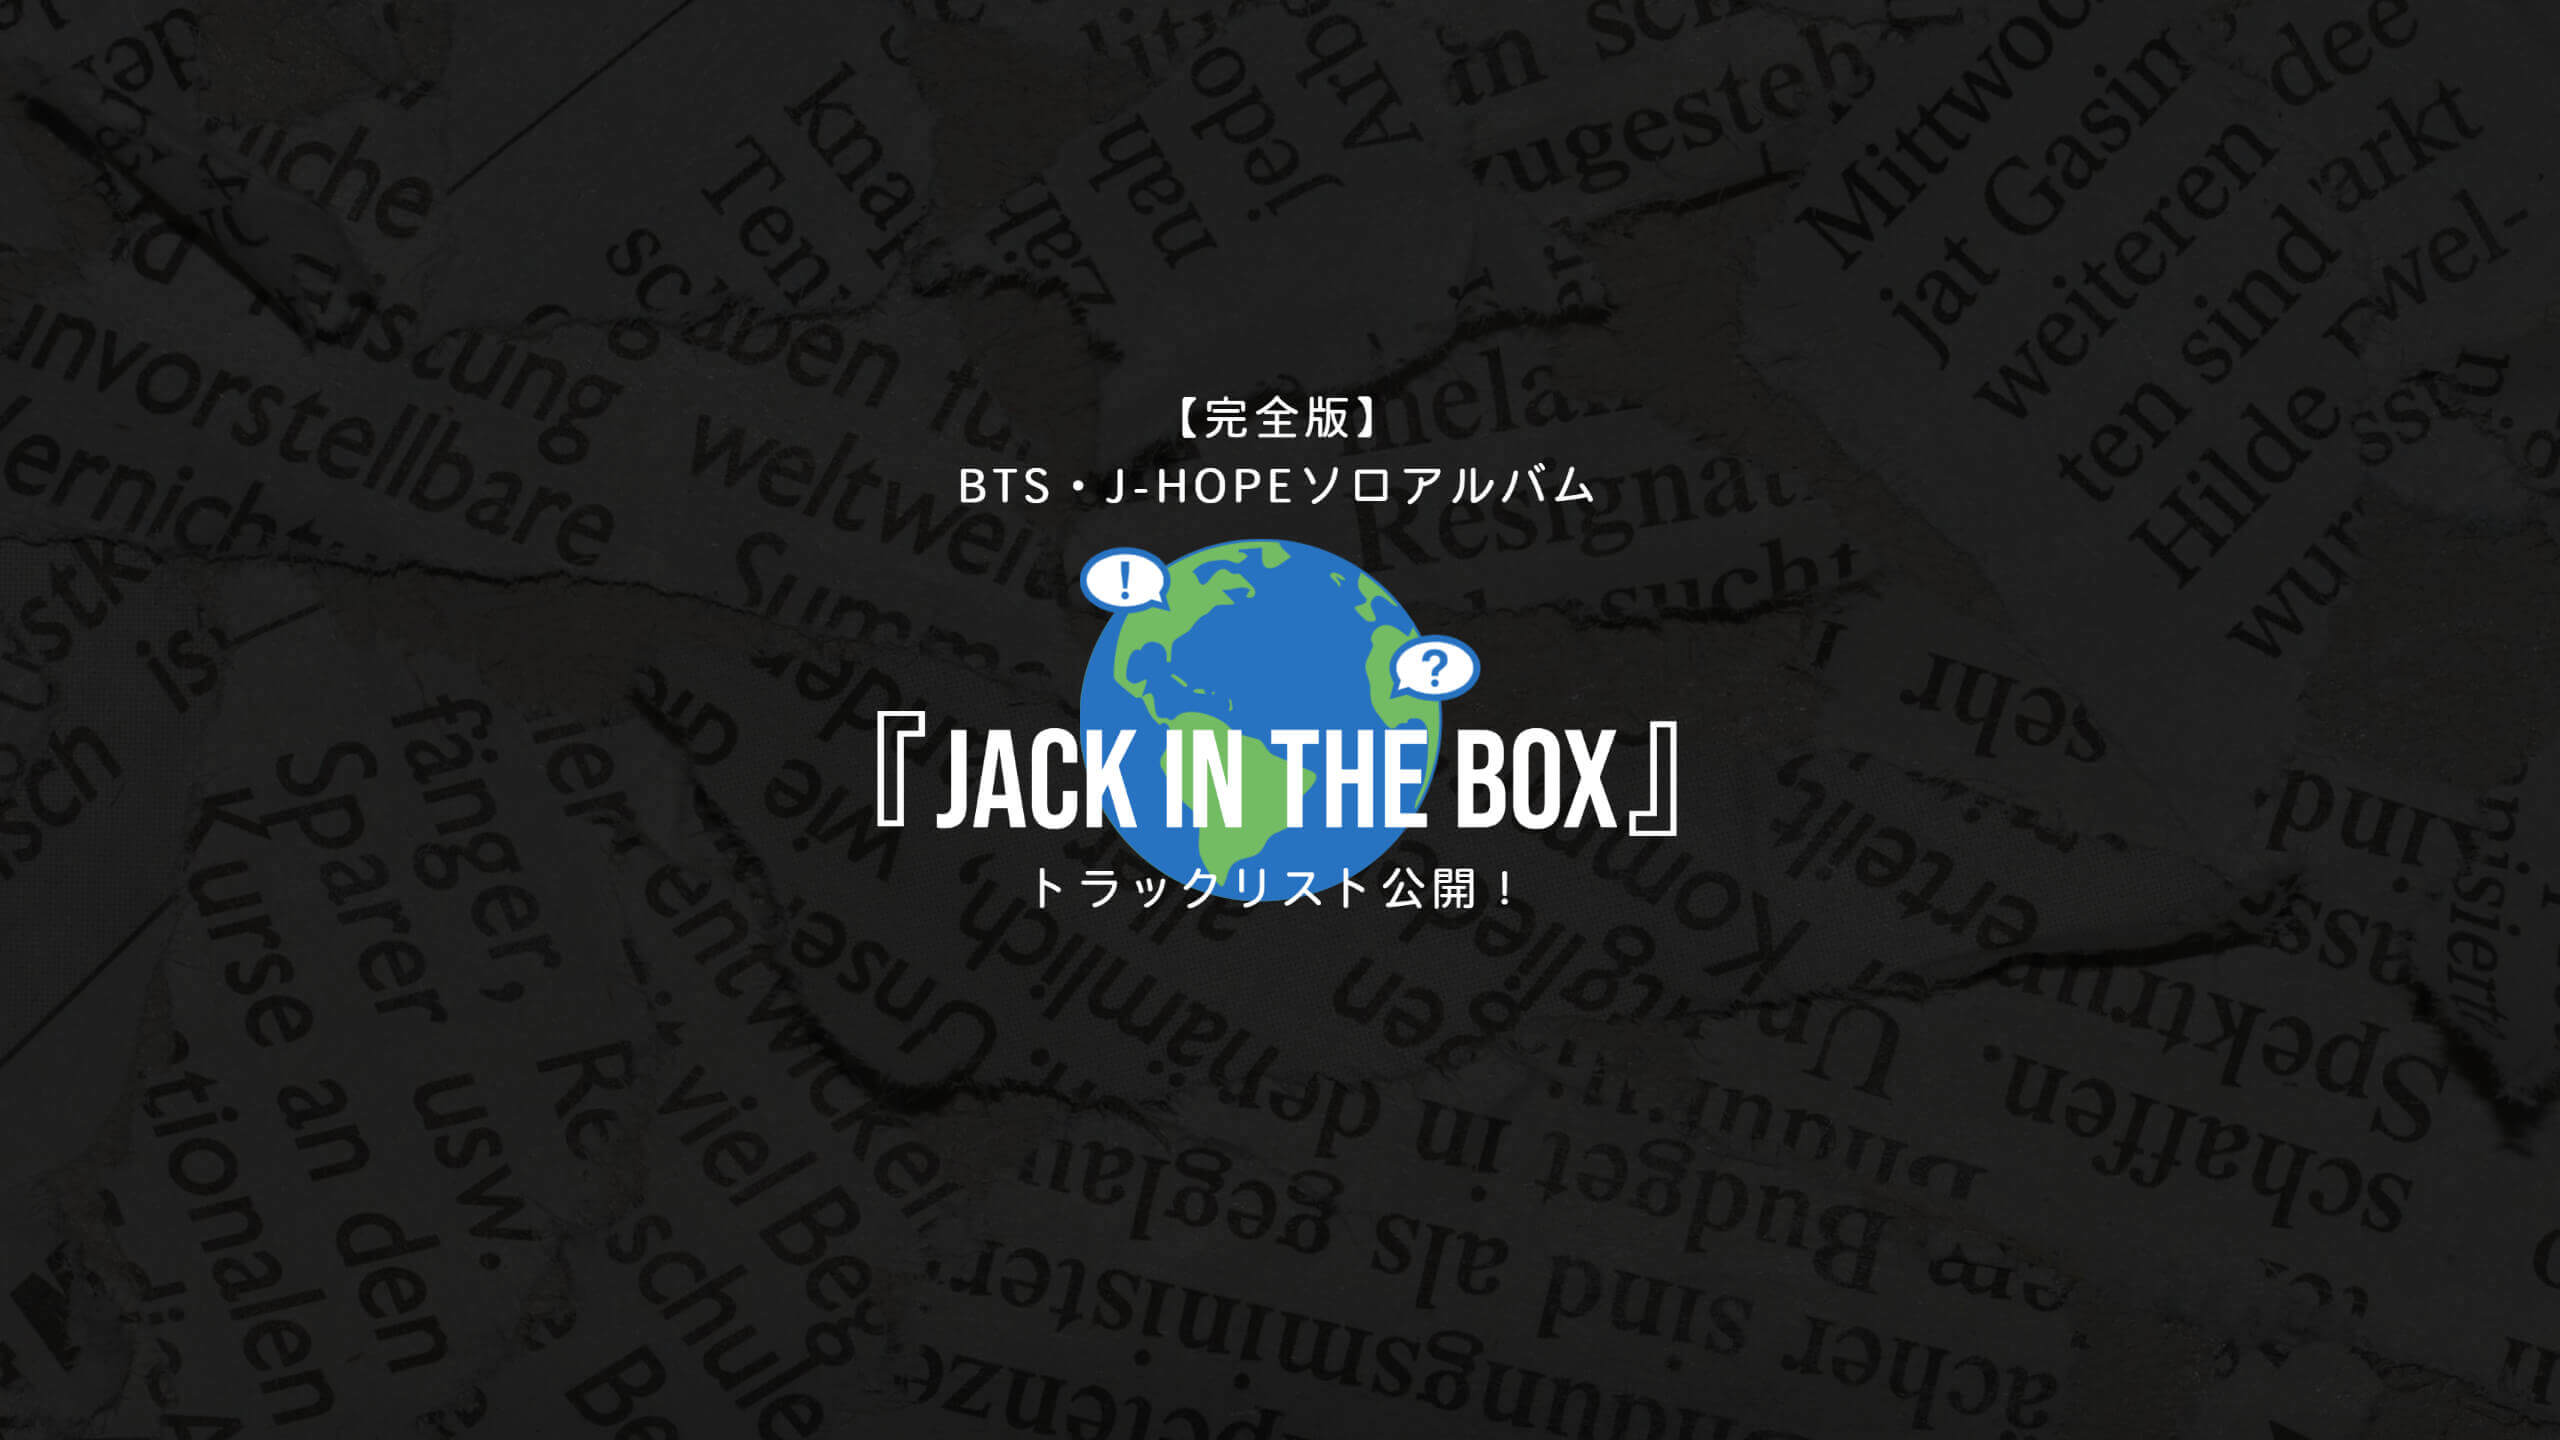 Jack In The Box' Tracklistホビトラックリスト